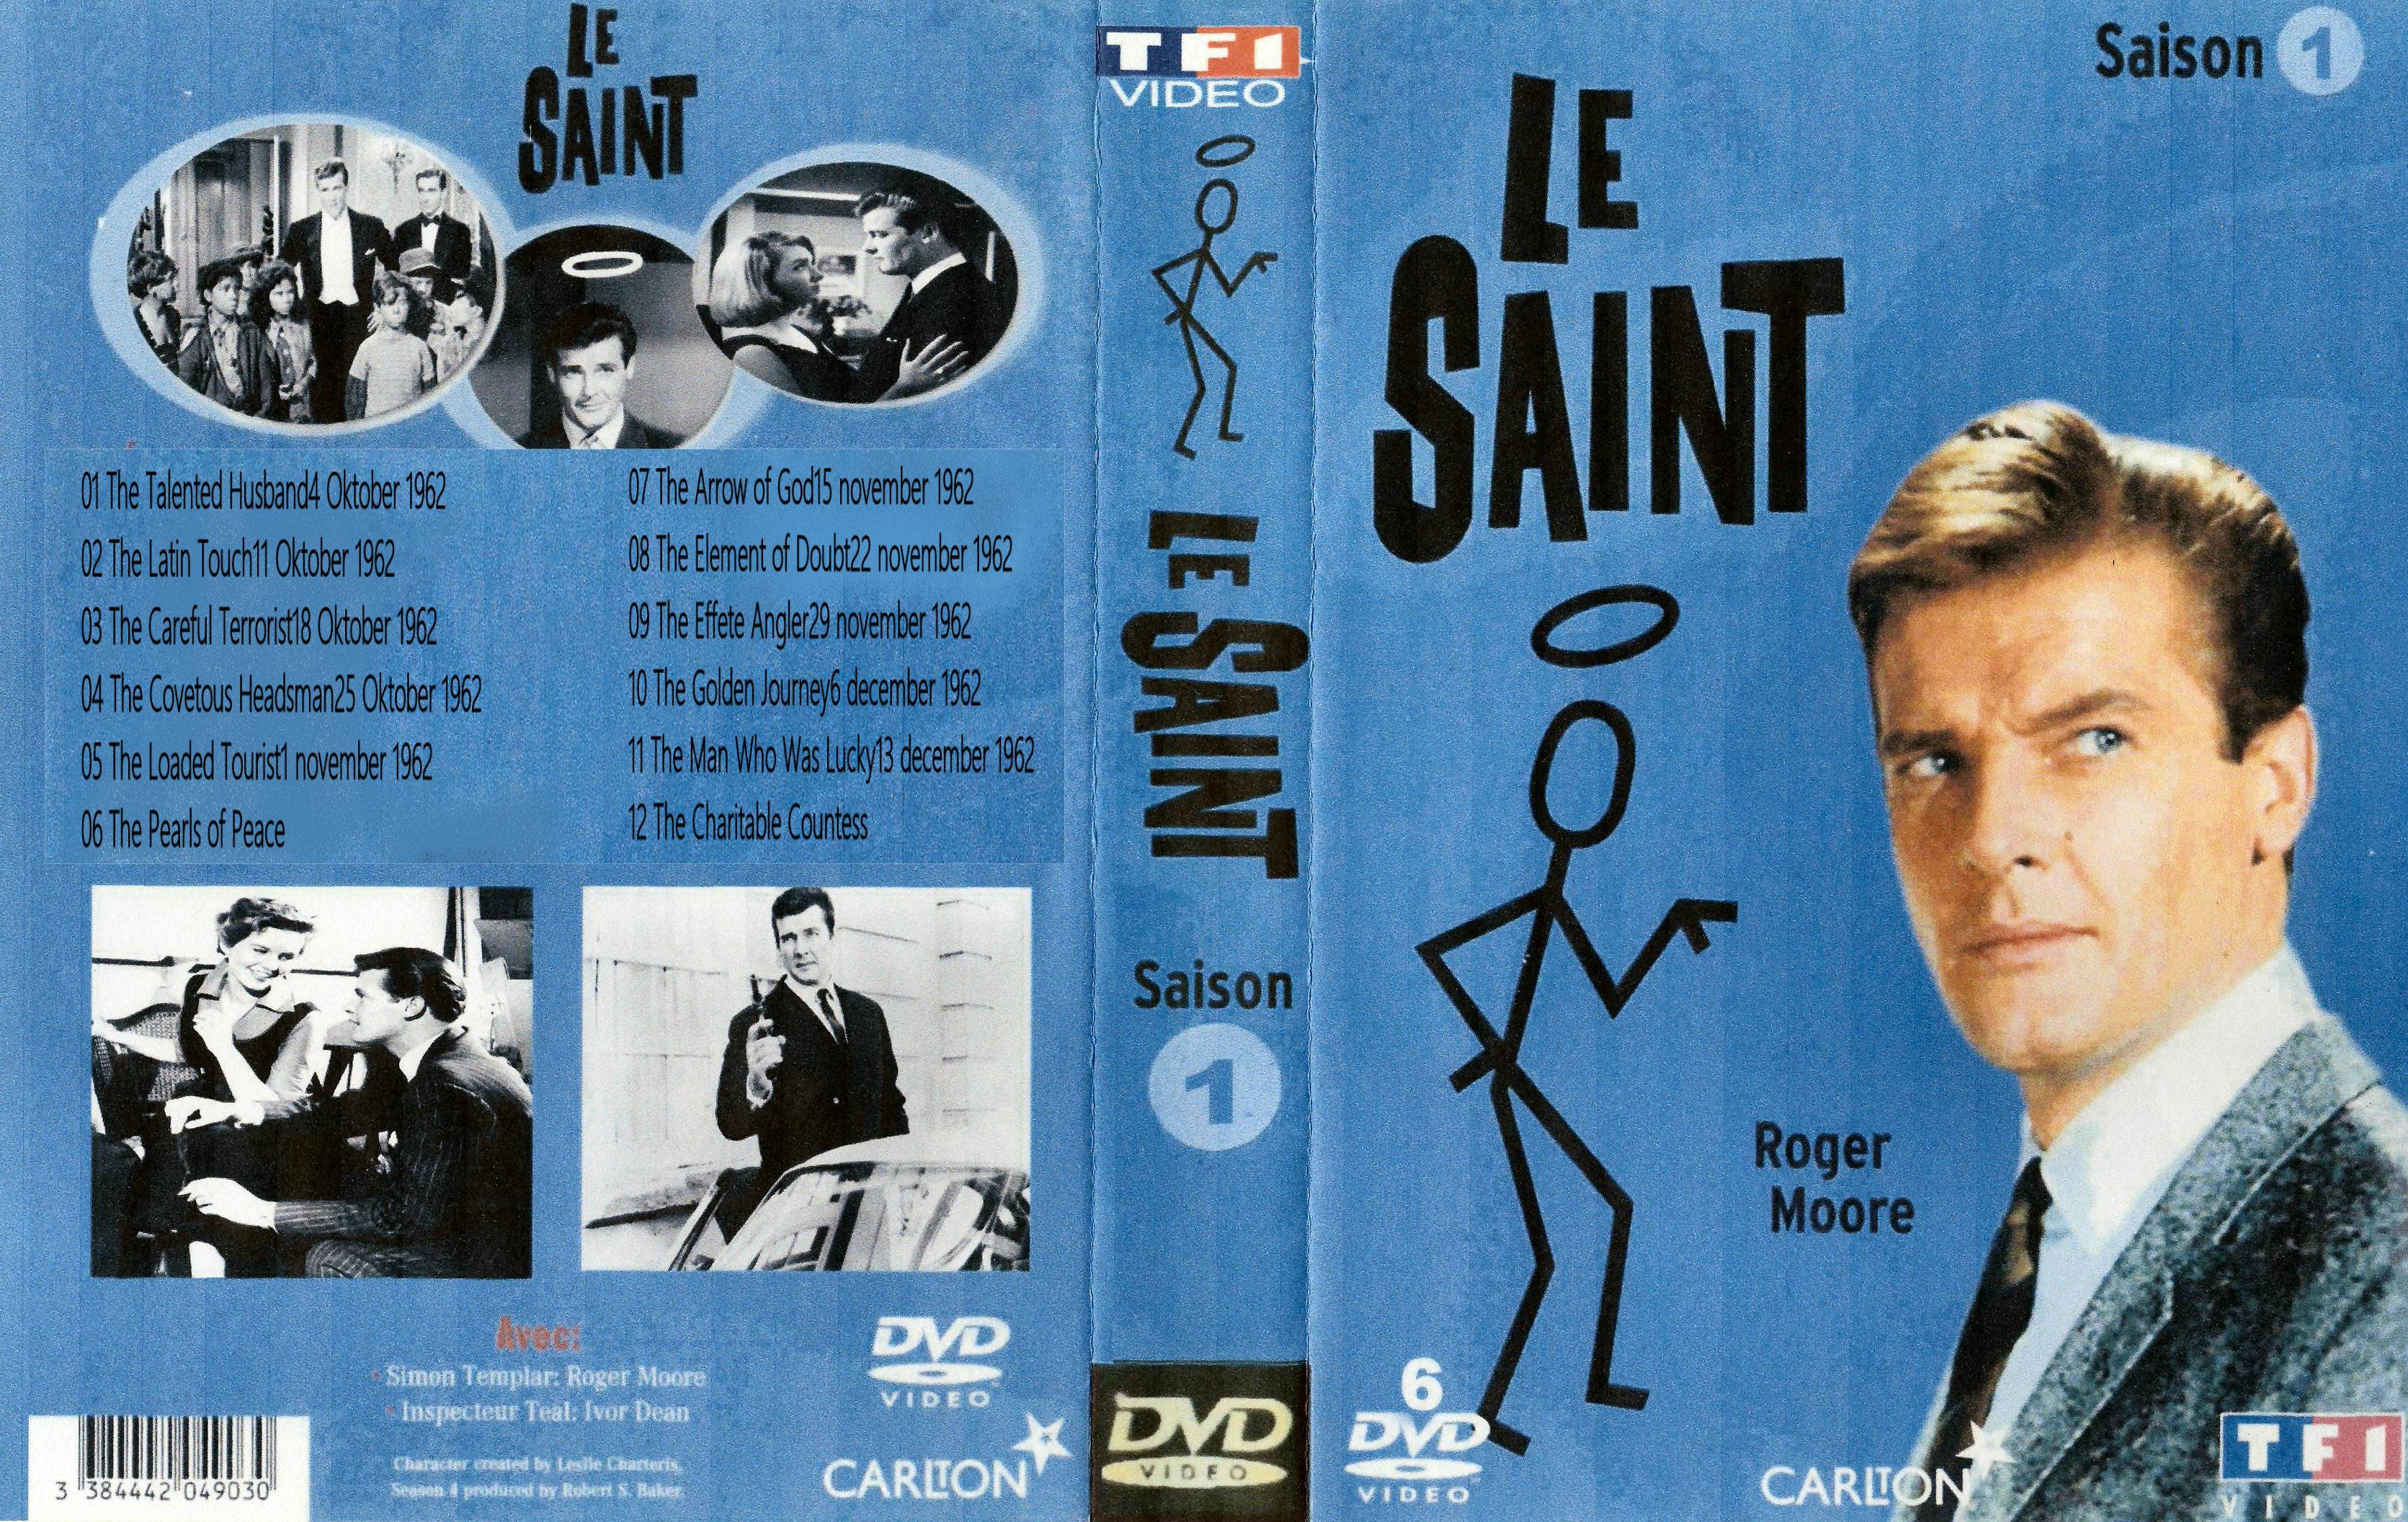 The Saint Seizoen 1 ( 1962 ) DvD 3